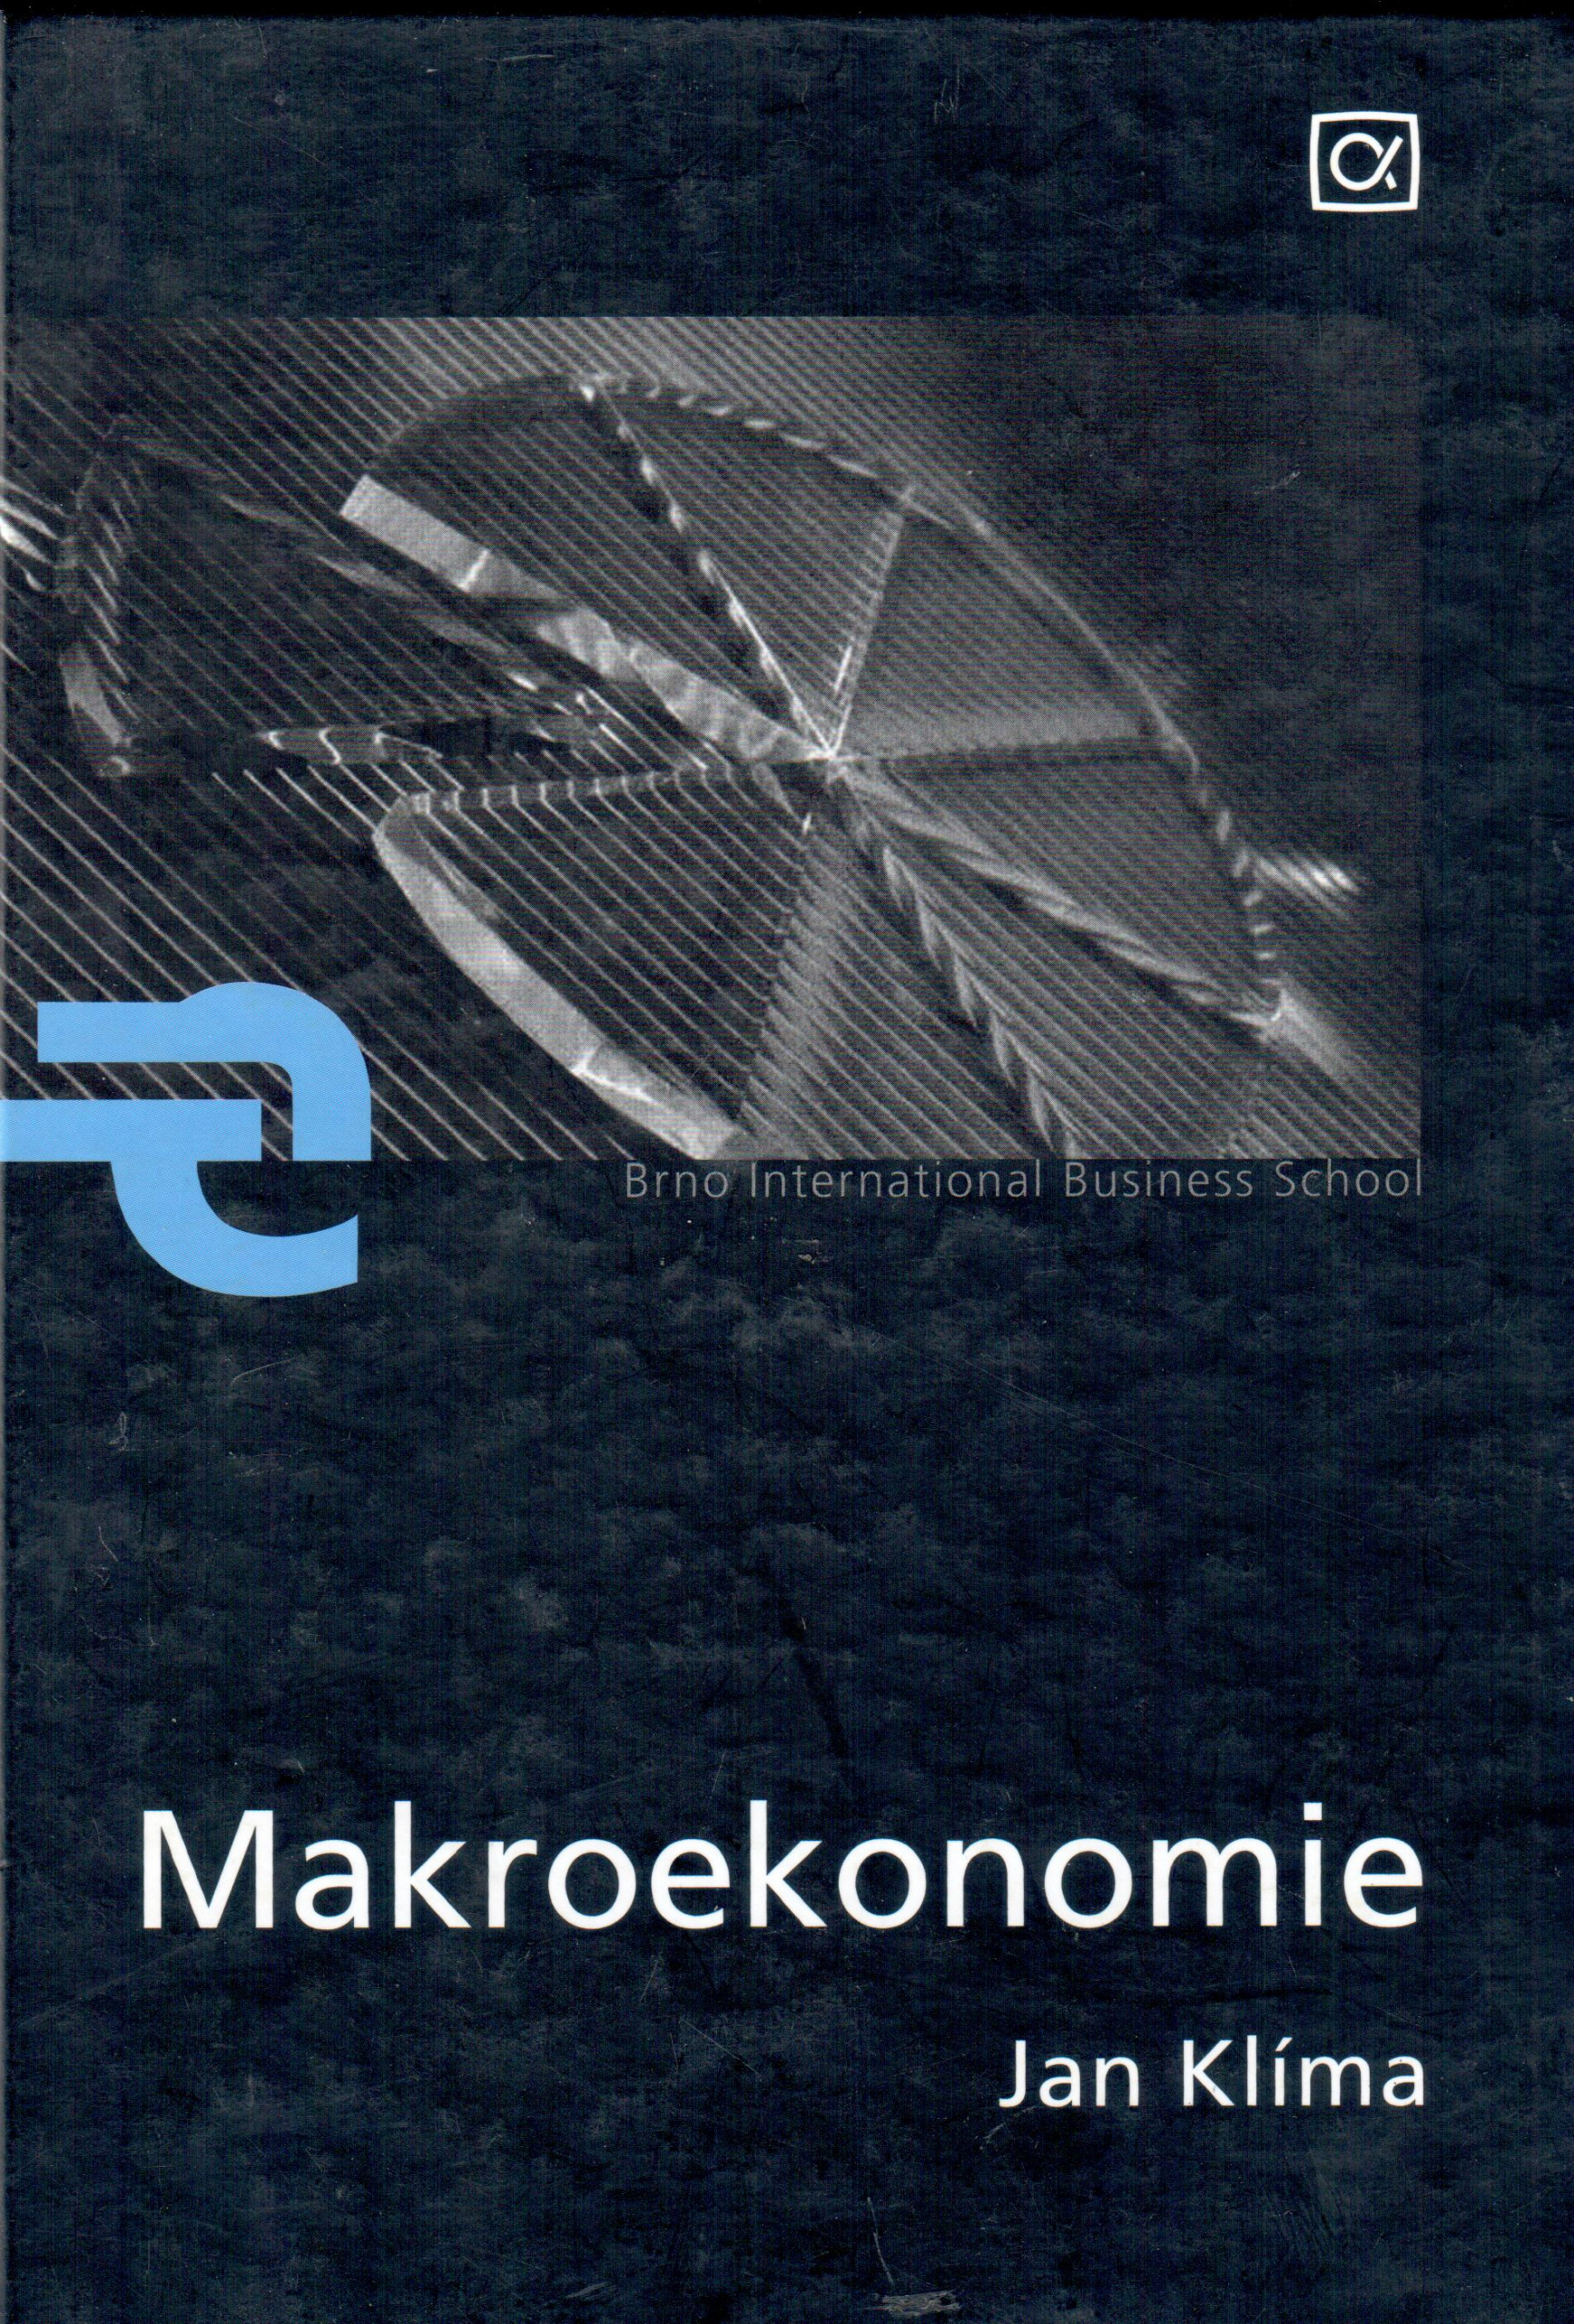 Makroekonomie (2006) - Náhled učebnice